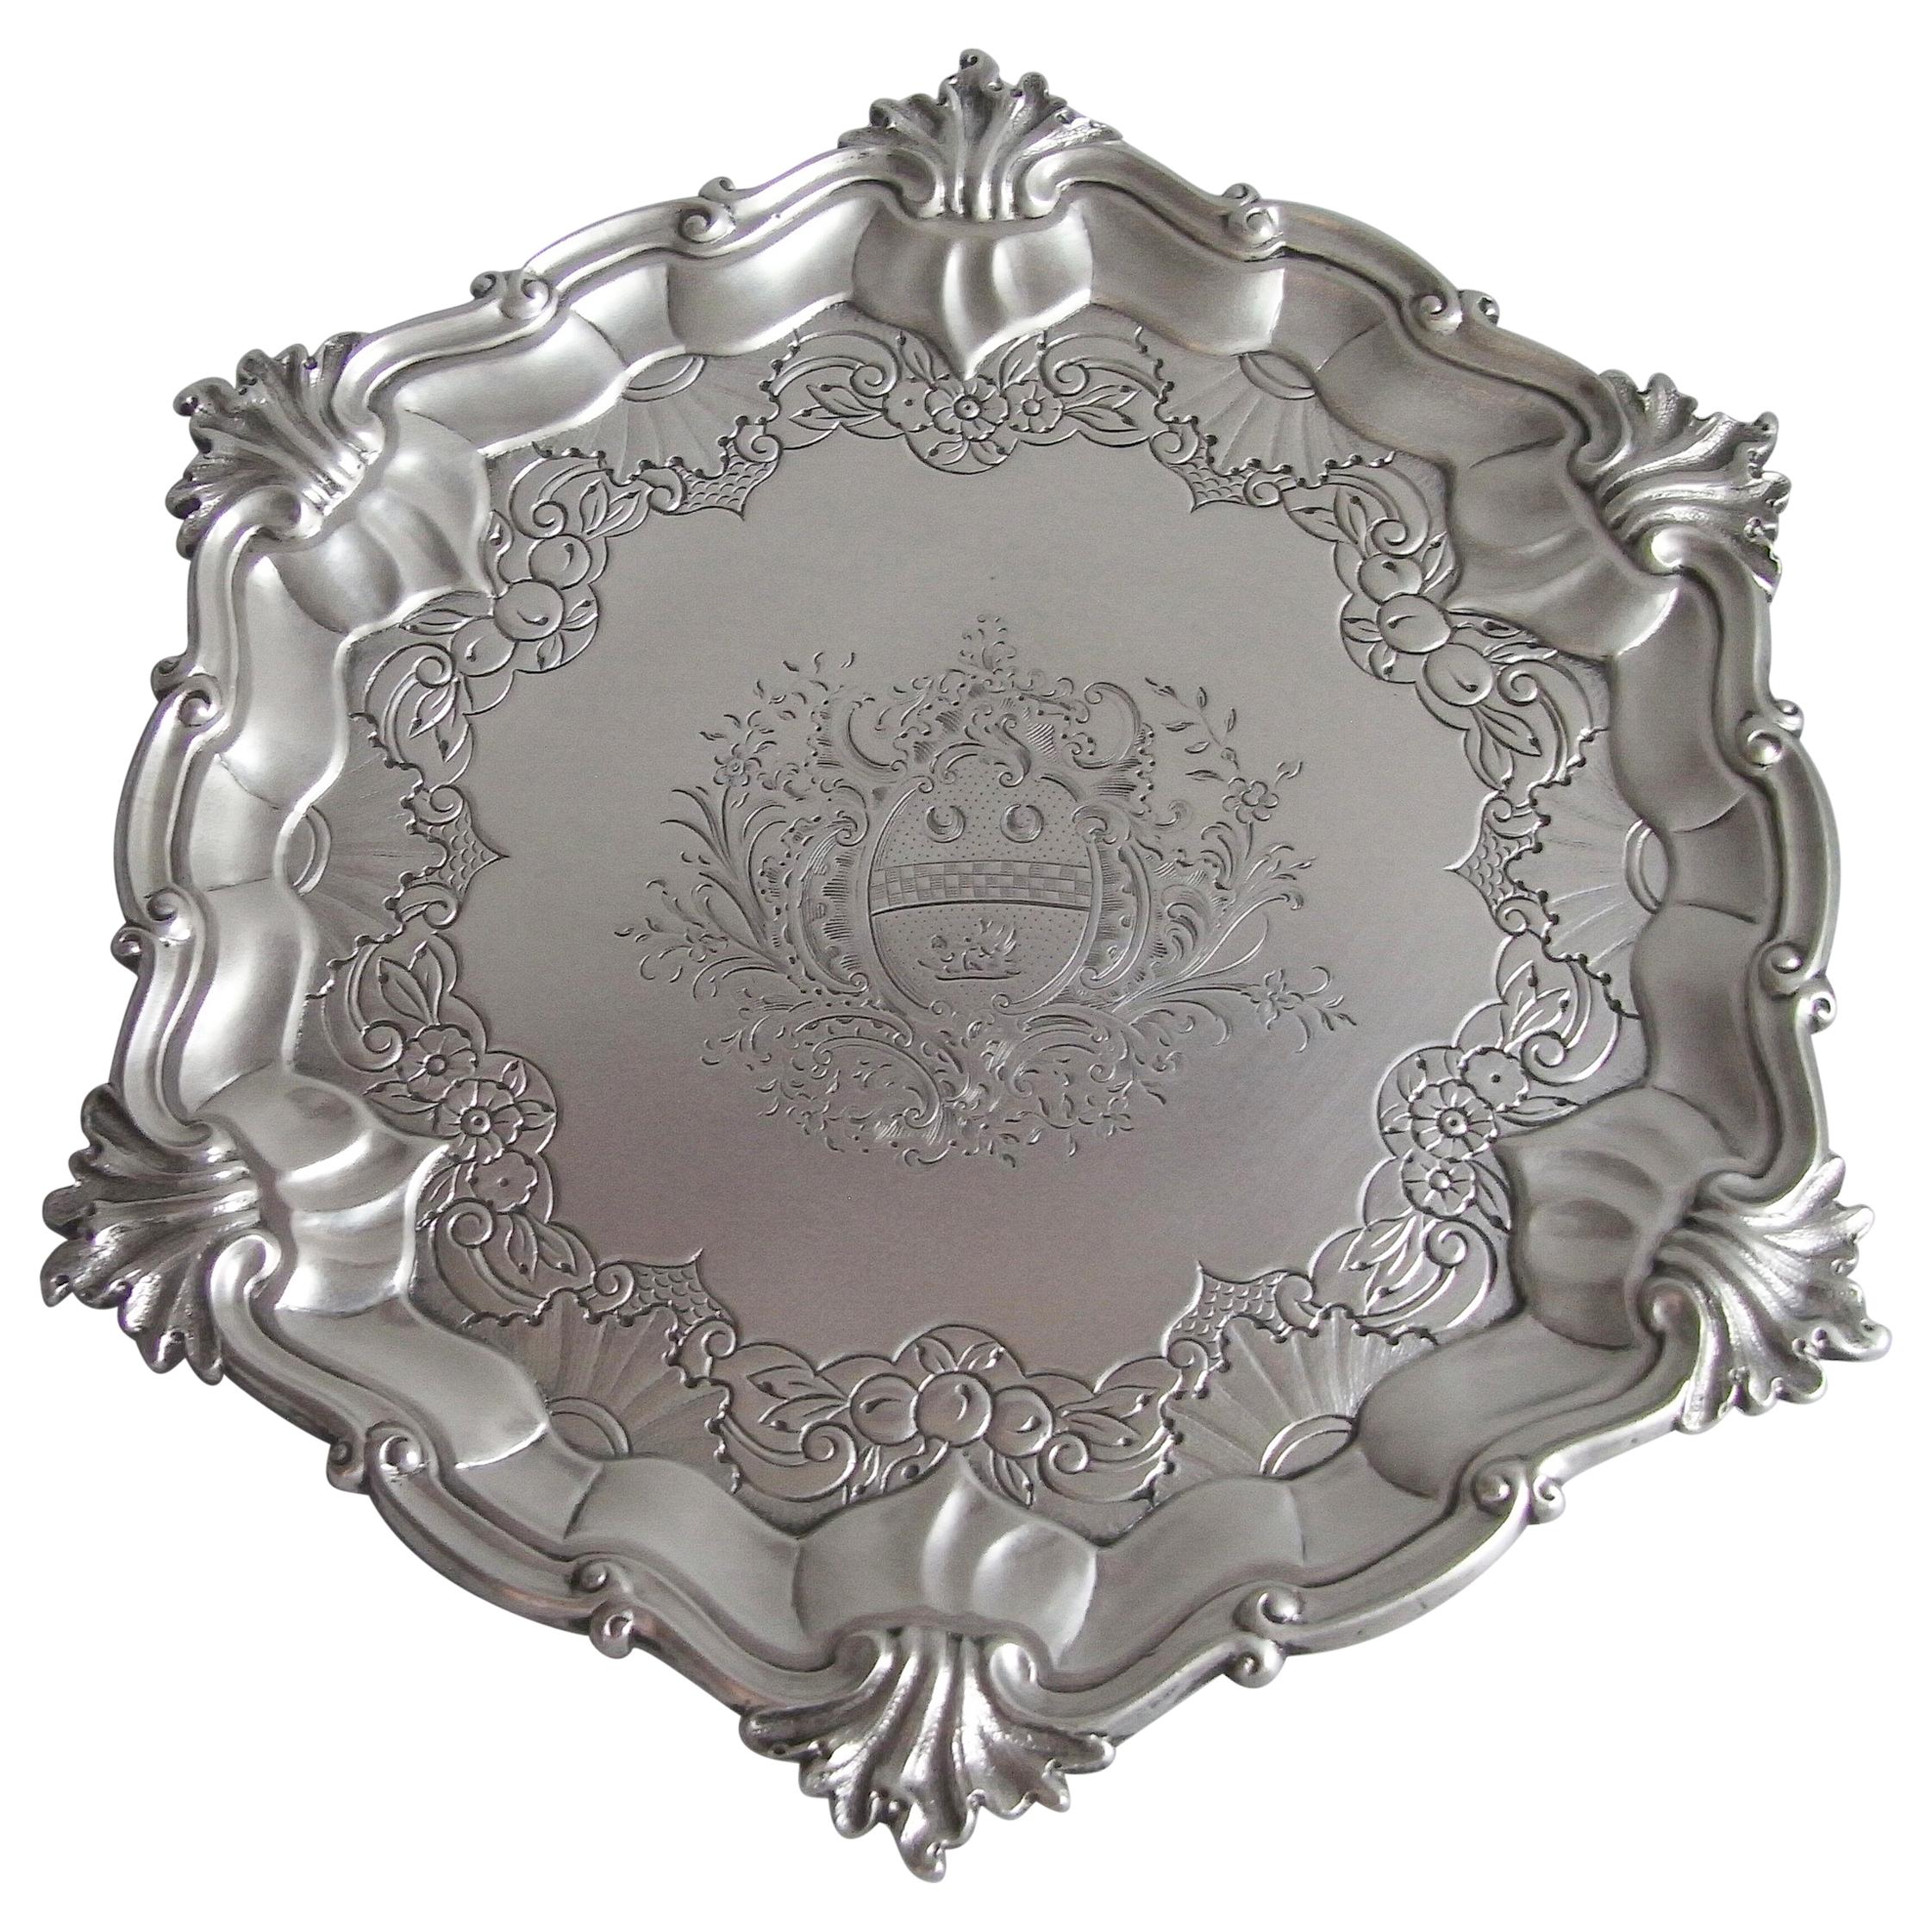 Exceptionally Rare Early George III Hexagonal Salver Made by Robert Gordon